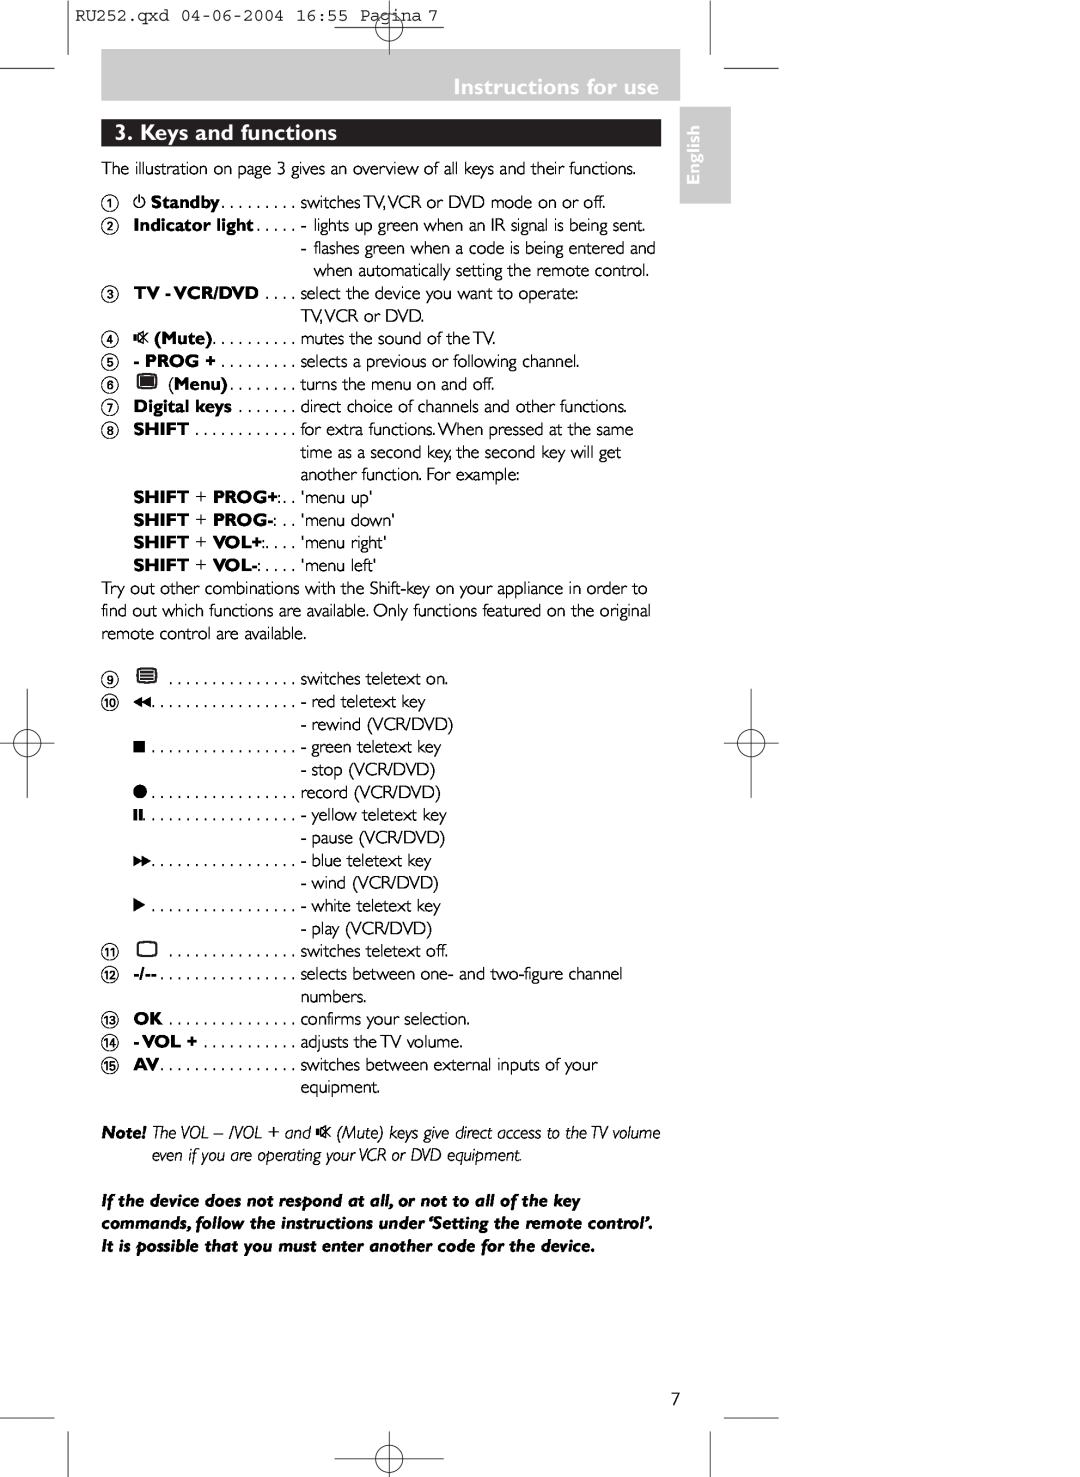 Philips SBC RU 252 manual Instructions for use 3. Keys and functions, Menu, Shift + Vol+, English 